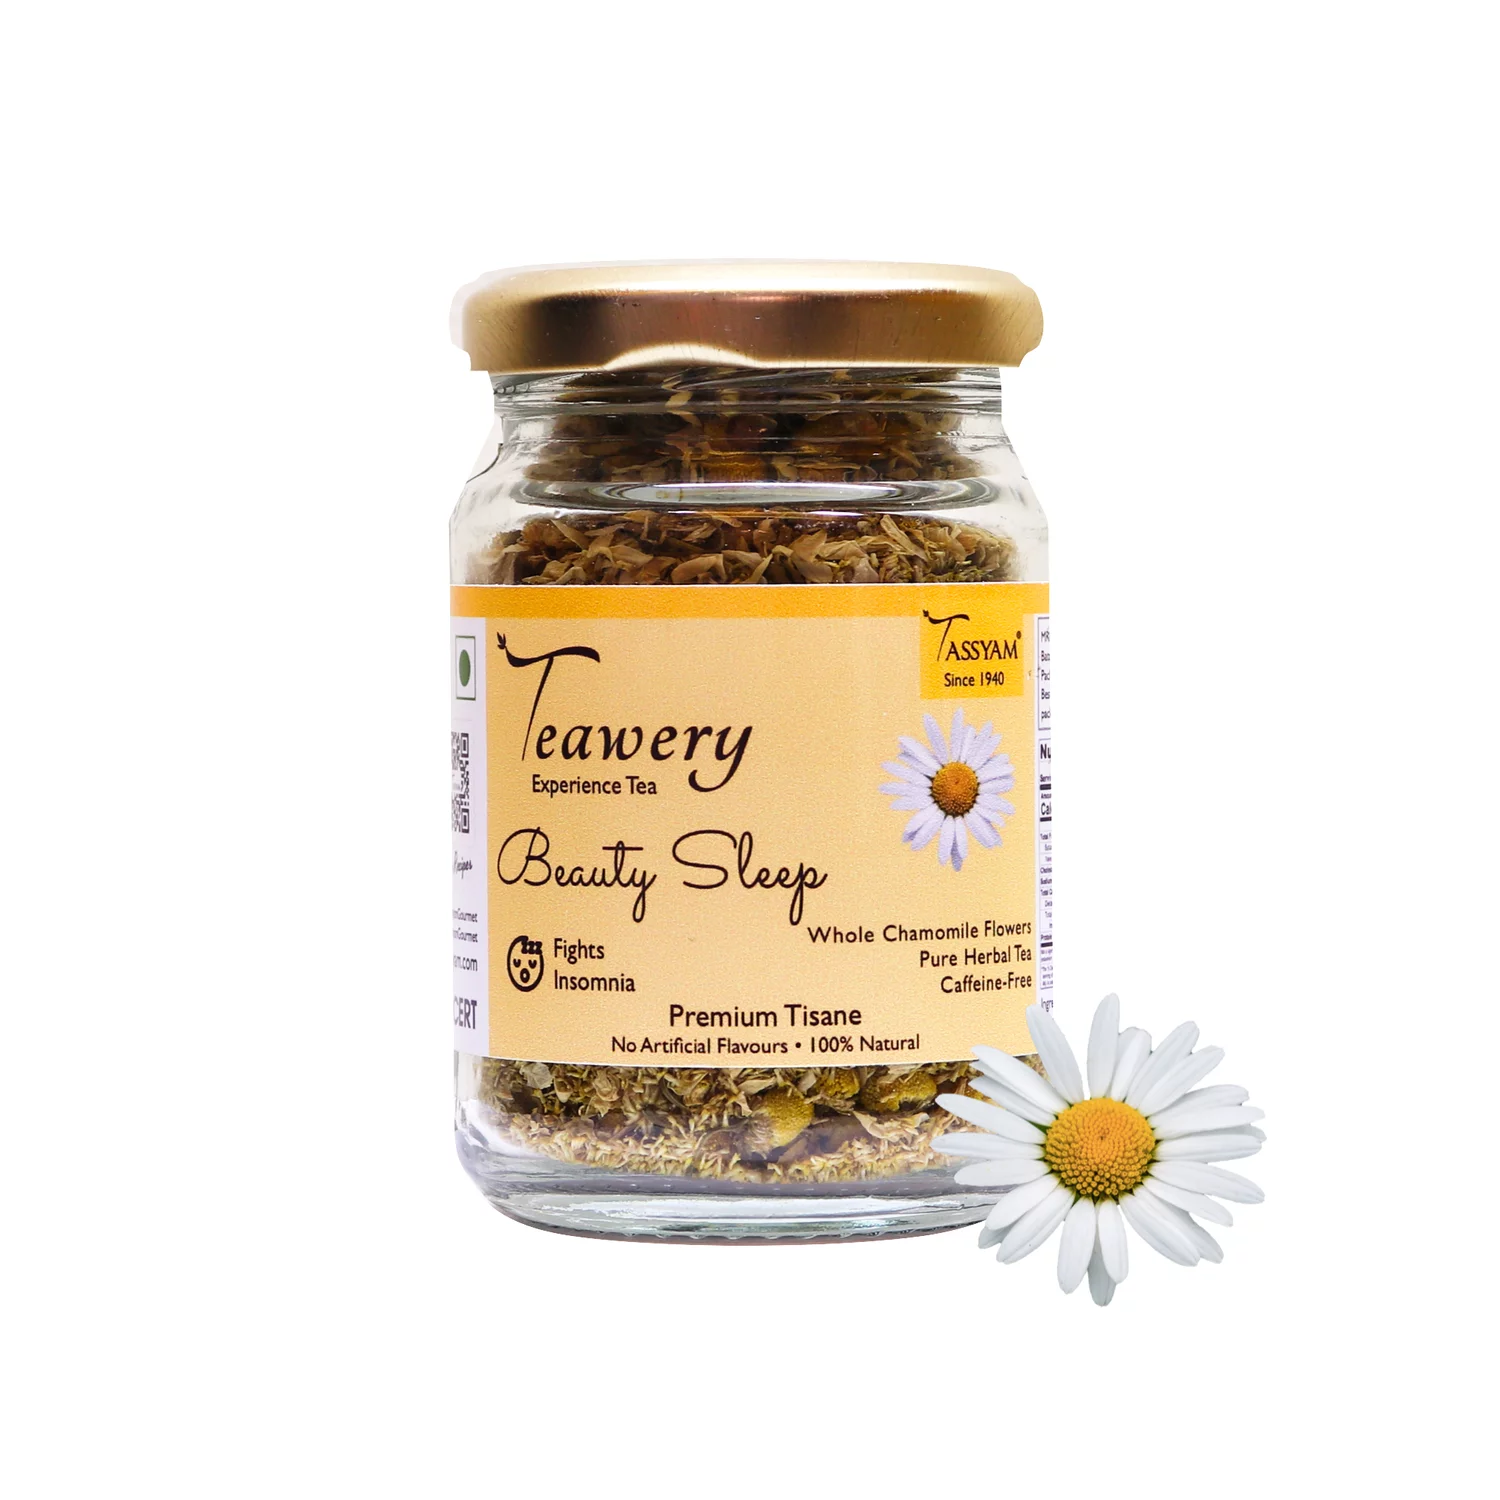 Teawery Beauty Sleep Tisane 20g | Caffeine Free Herbal Tea by Tassyam Organics